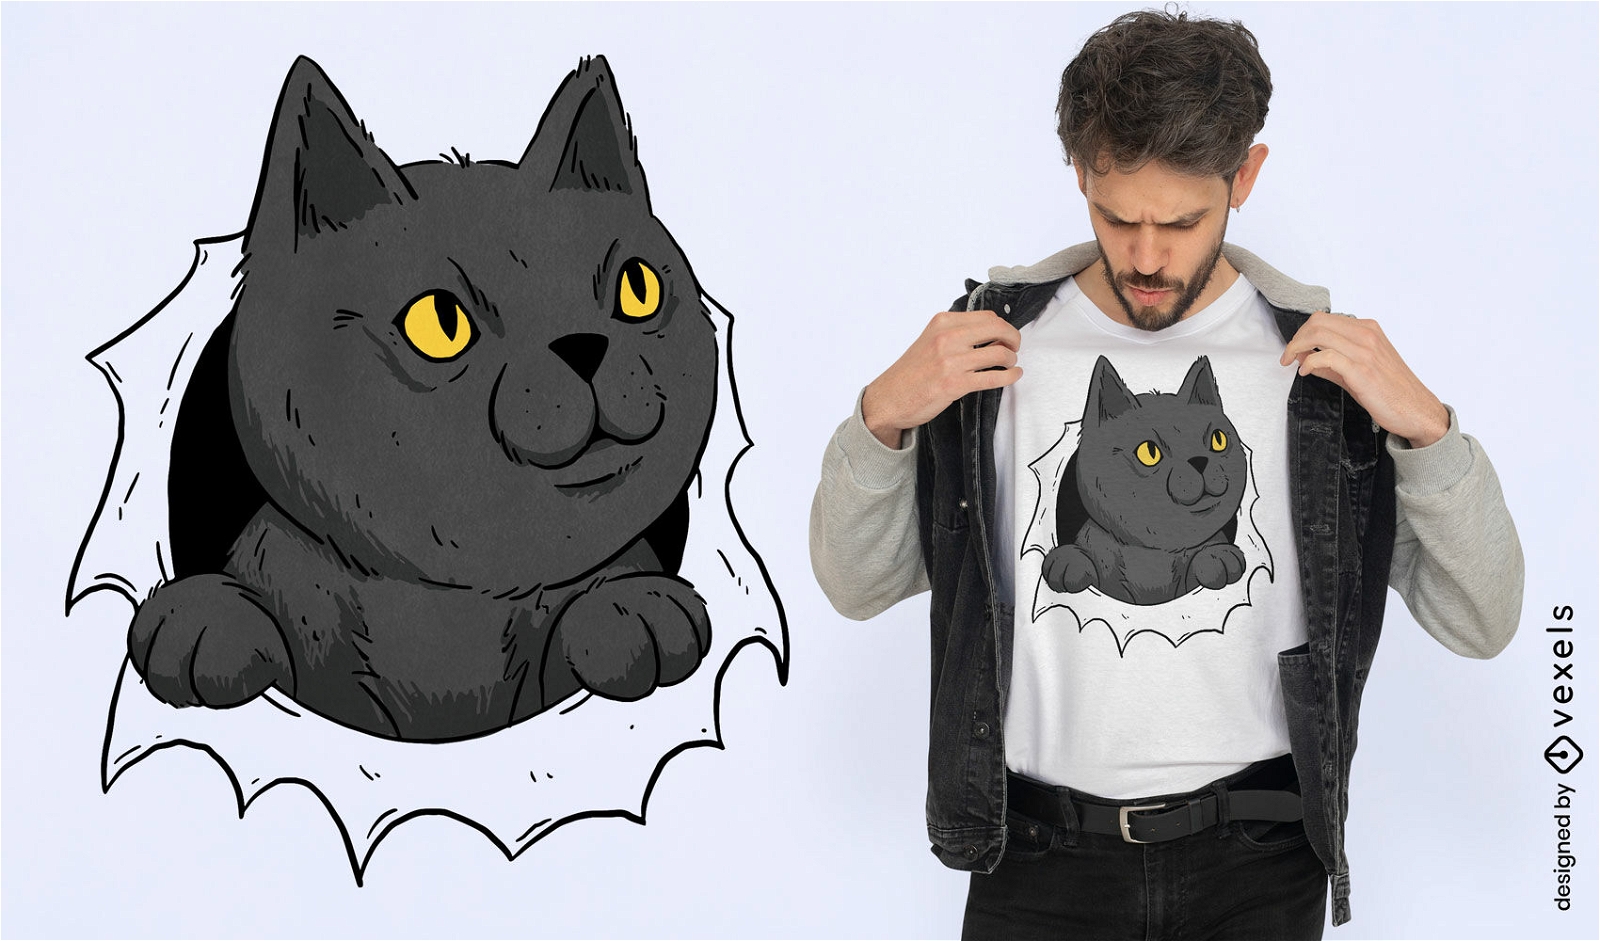 Black cat ripping shirt t-shirt design